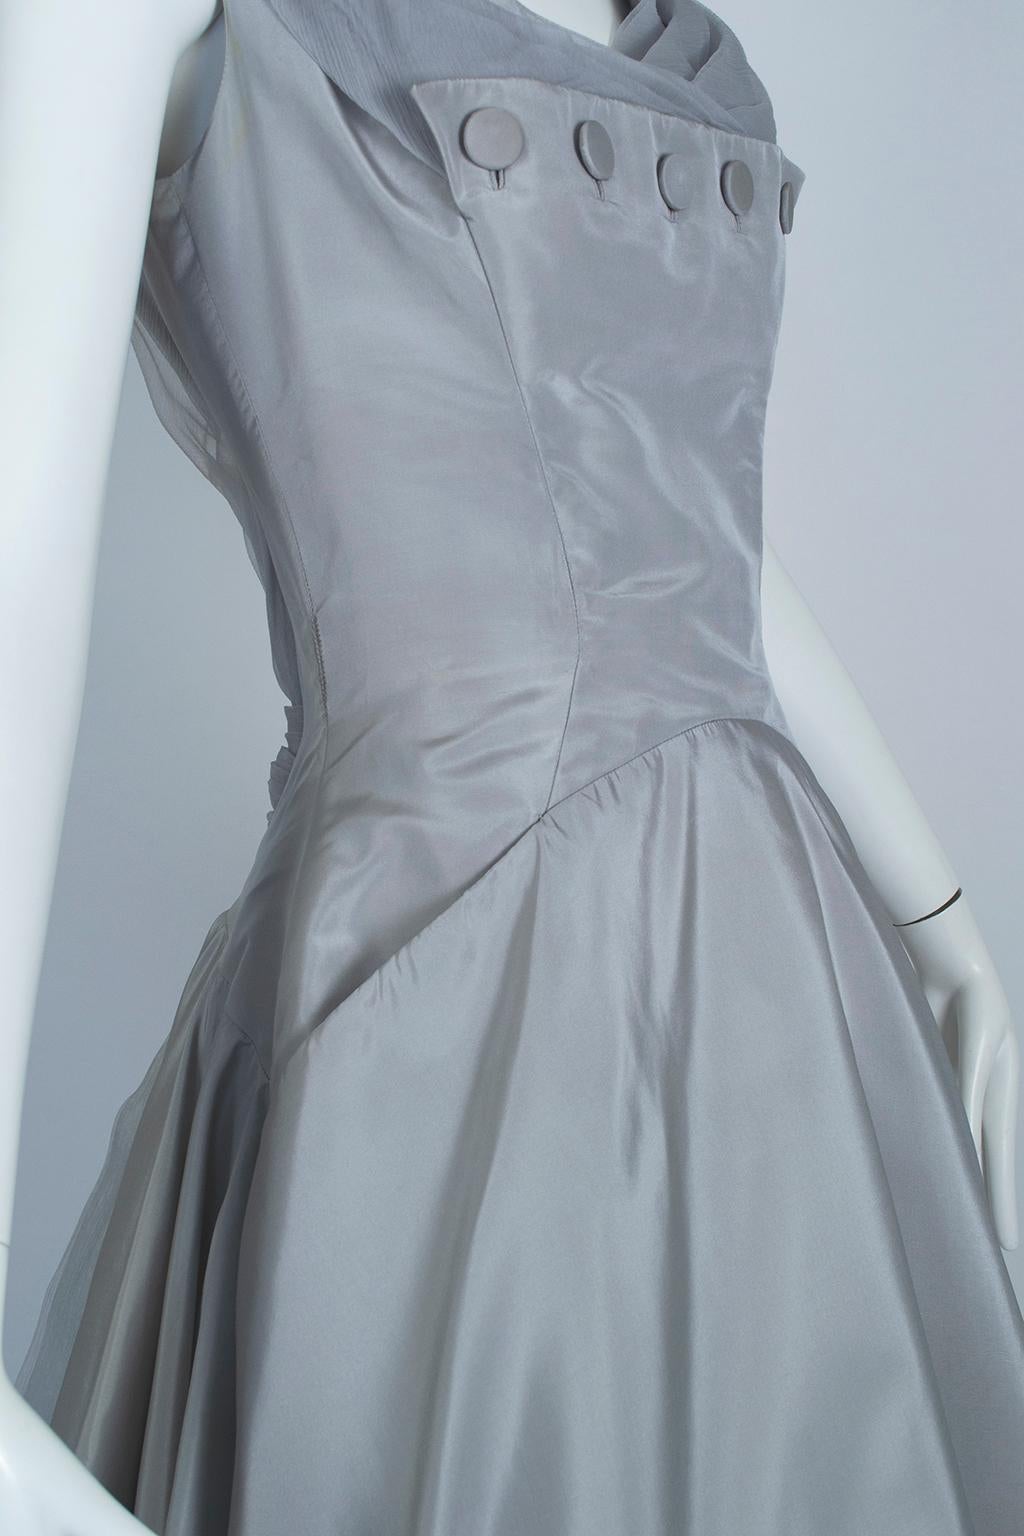 Women's Werlé Beverly Hills Dove Gray Bib-Front Ballerina Dress - Medium, 1950s For Sale